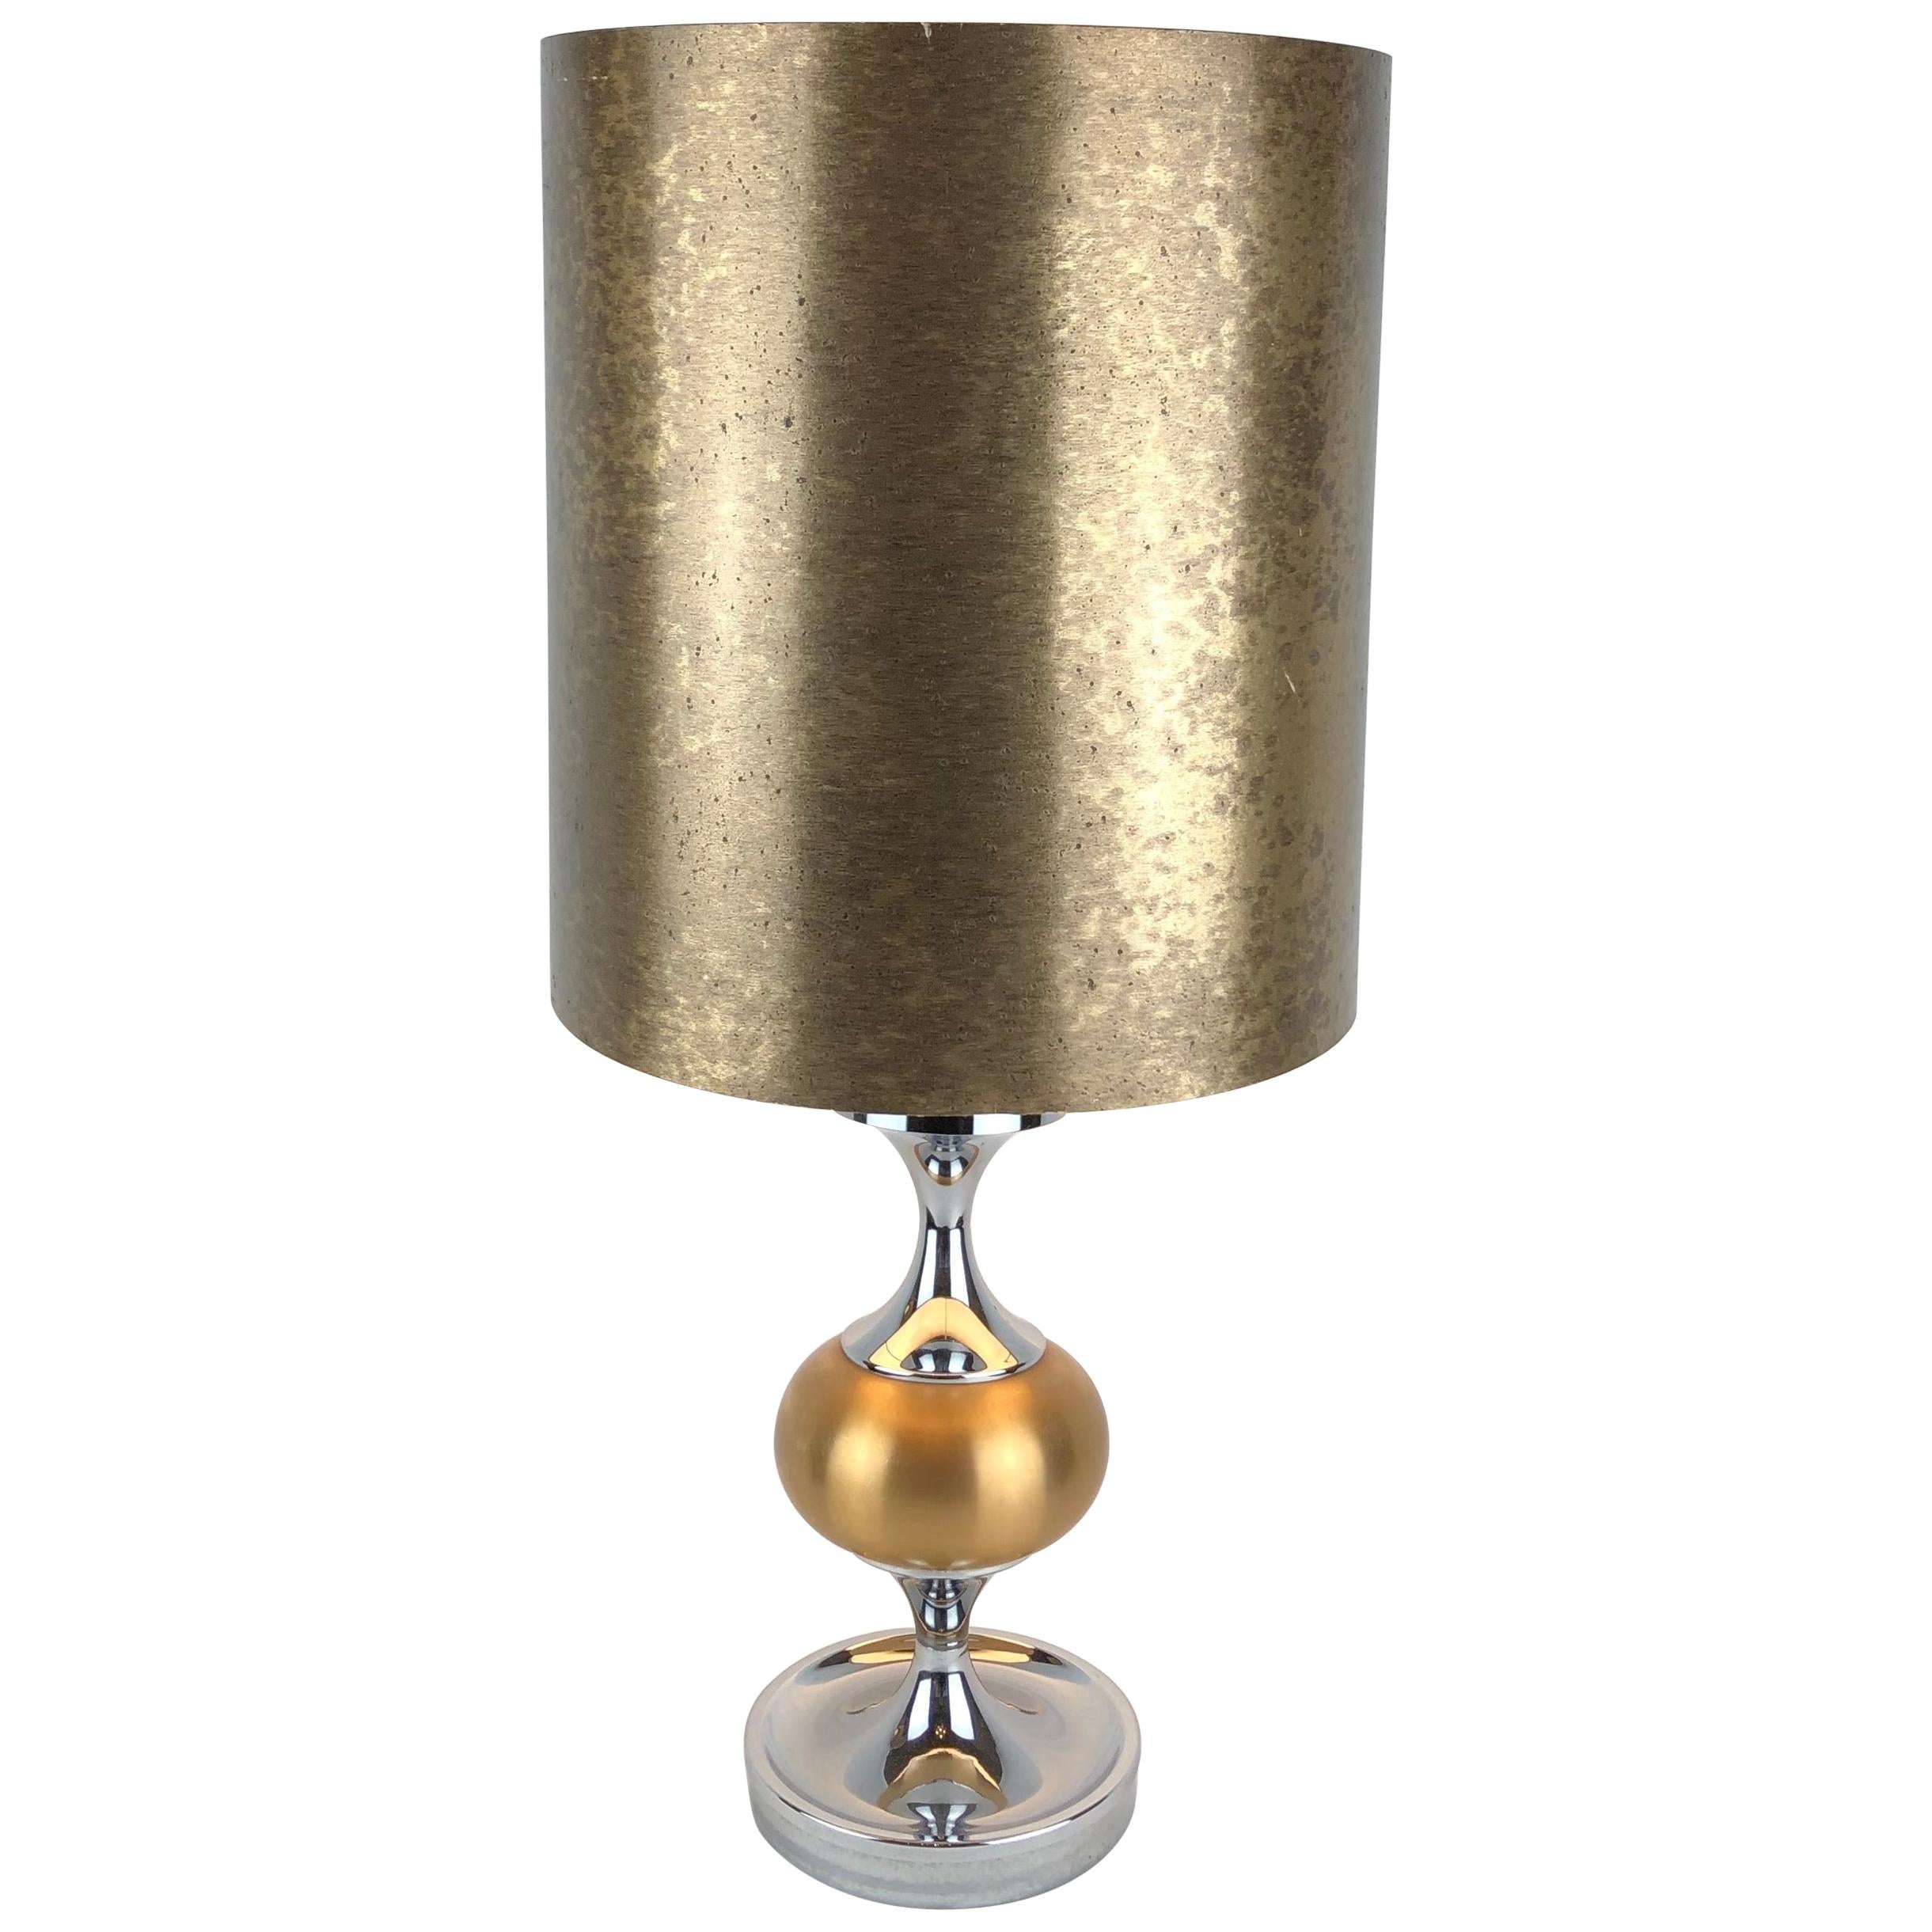 French Midcentury Maison Jansen Inspired Chrome Gold Shaded Table Lamp